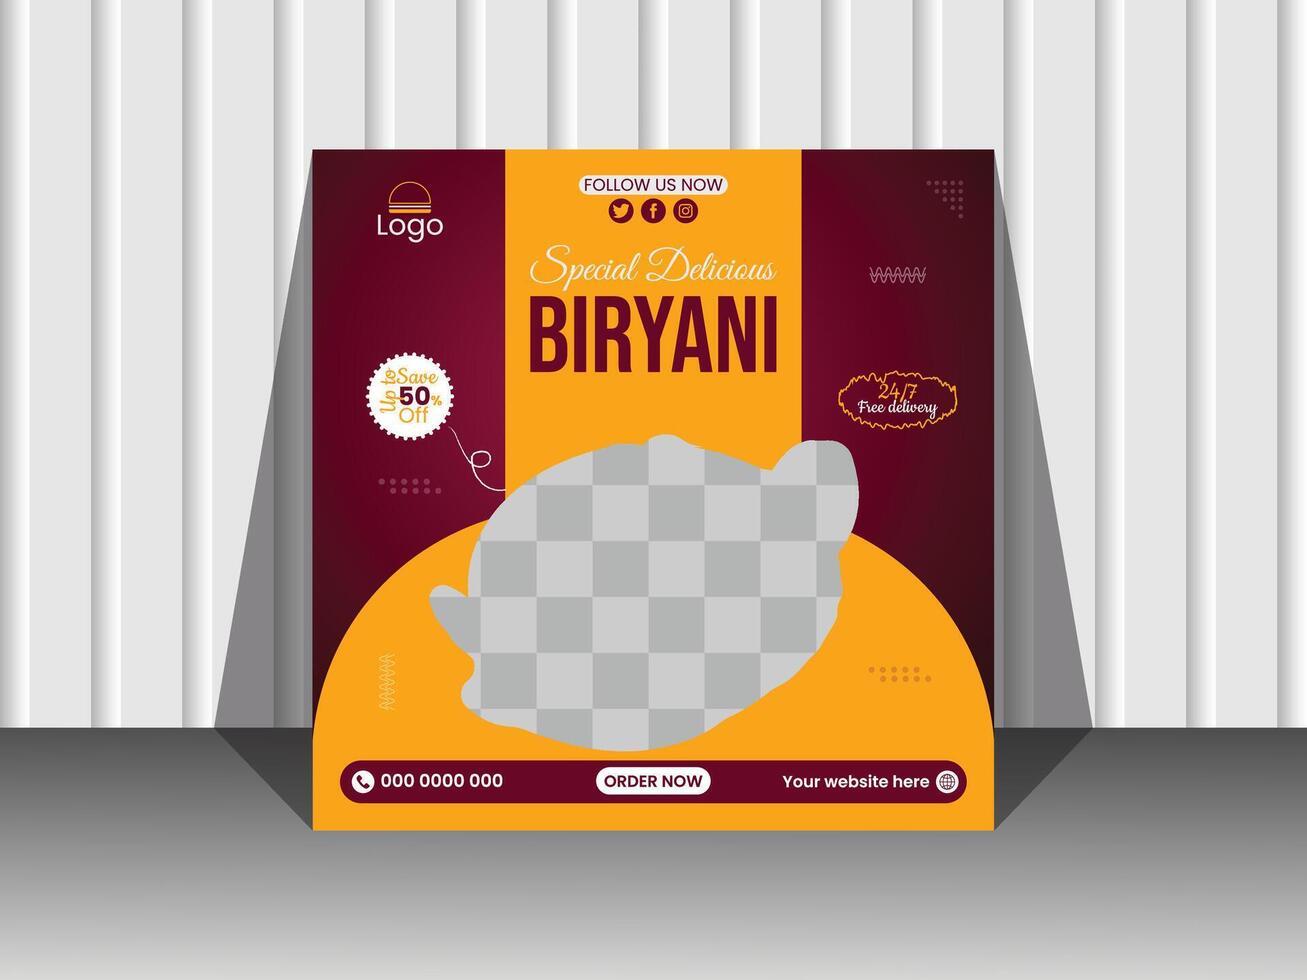 especial delicioso Biryani social medios de comunicación bandera modelo. vector